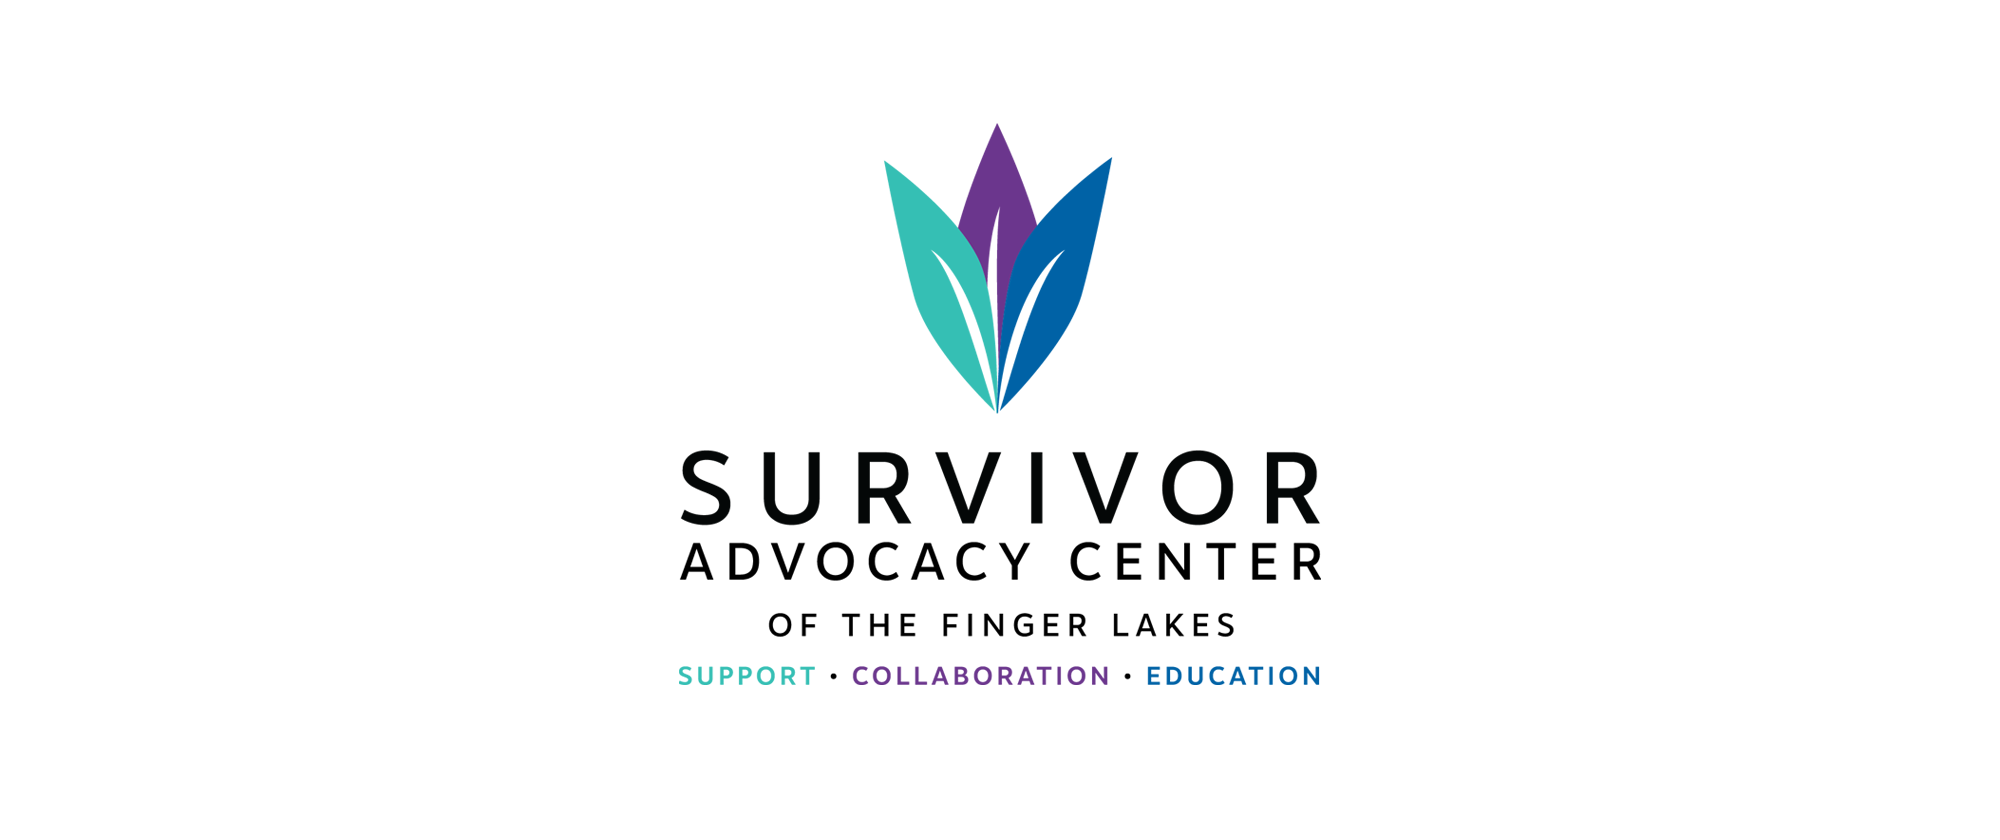 Survivor Advocacy Center Of The Finger Lakes Logo Identity